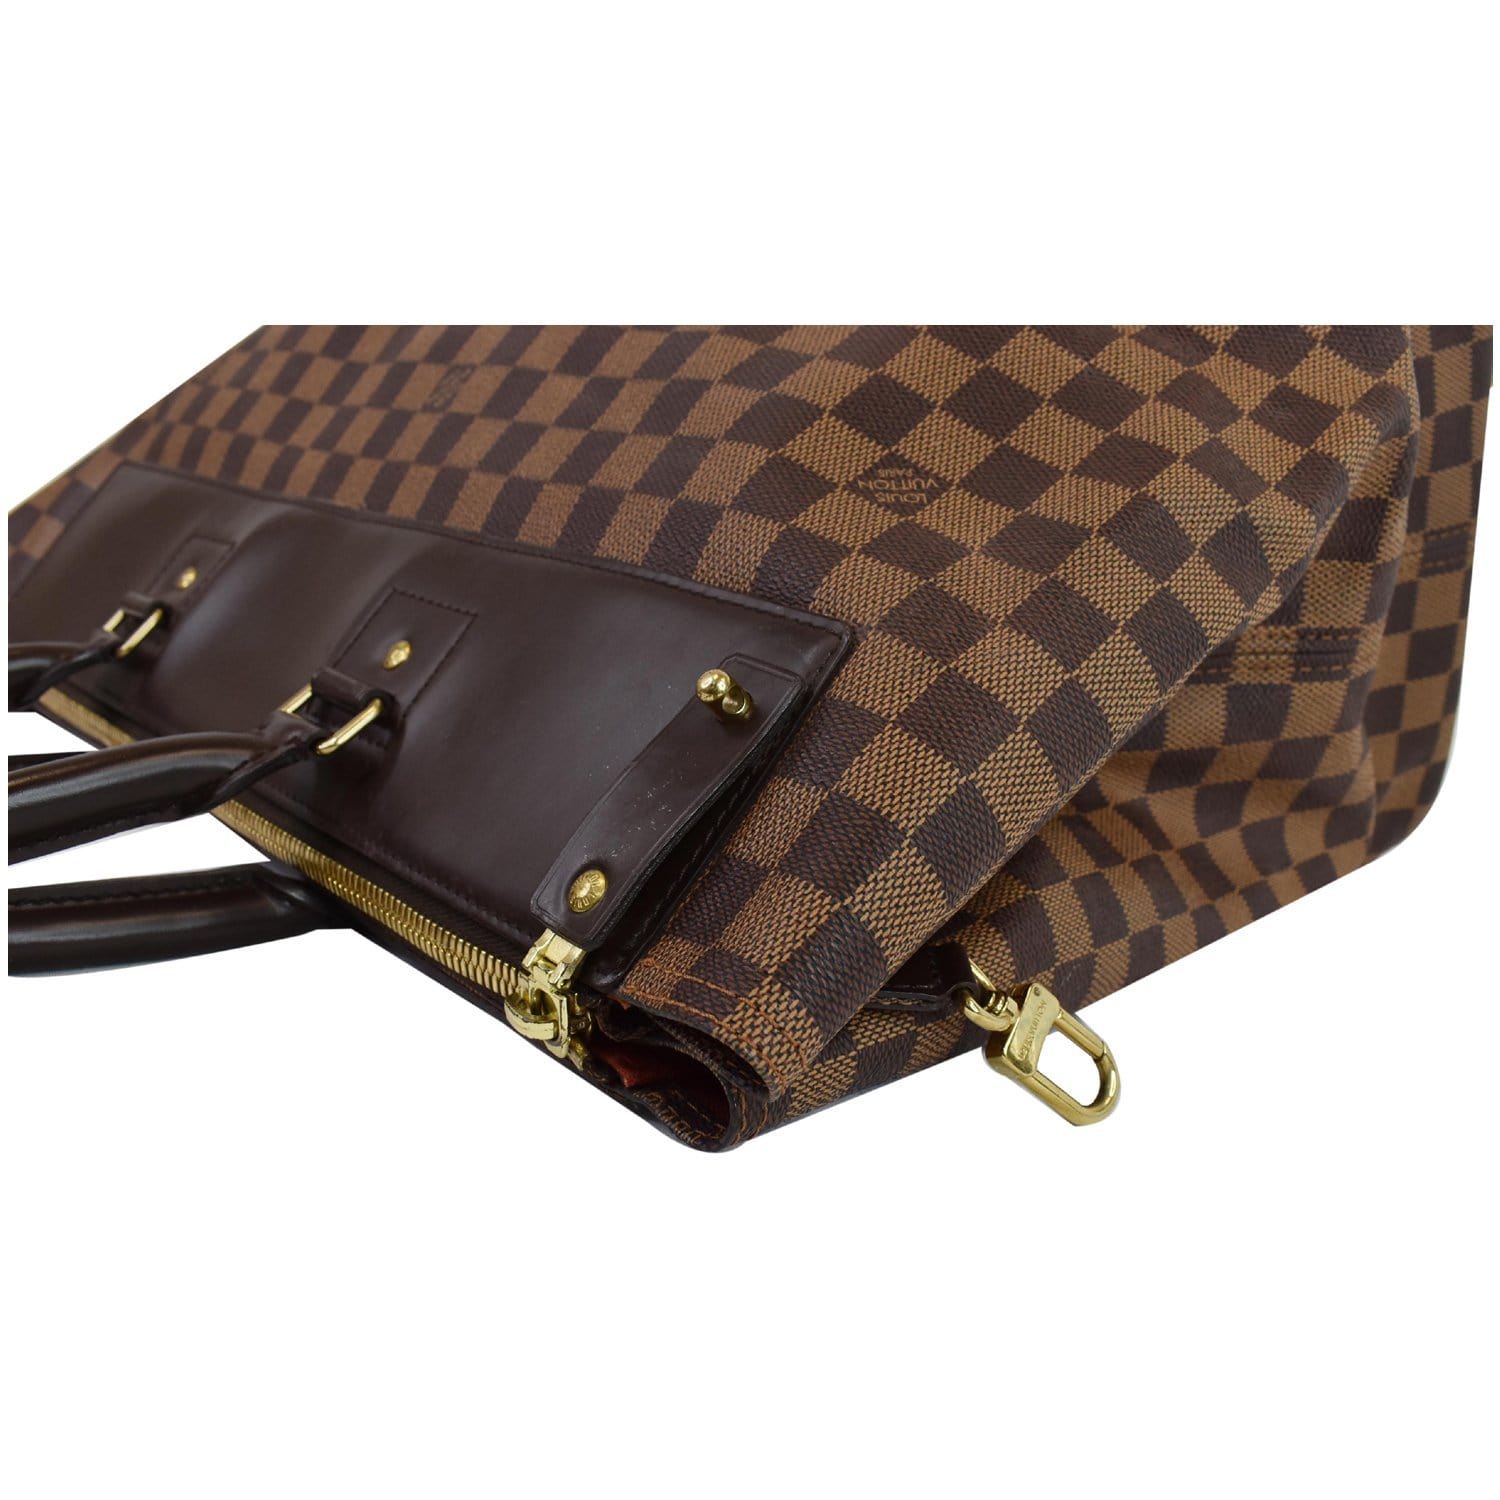 Louis Vuitton Greenwich Travel bag 374072